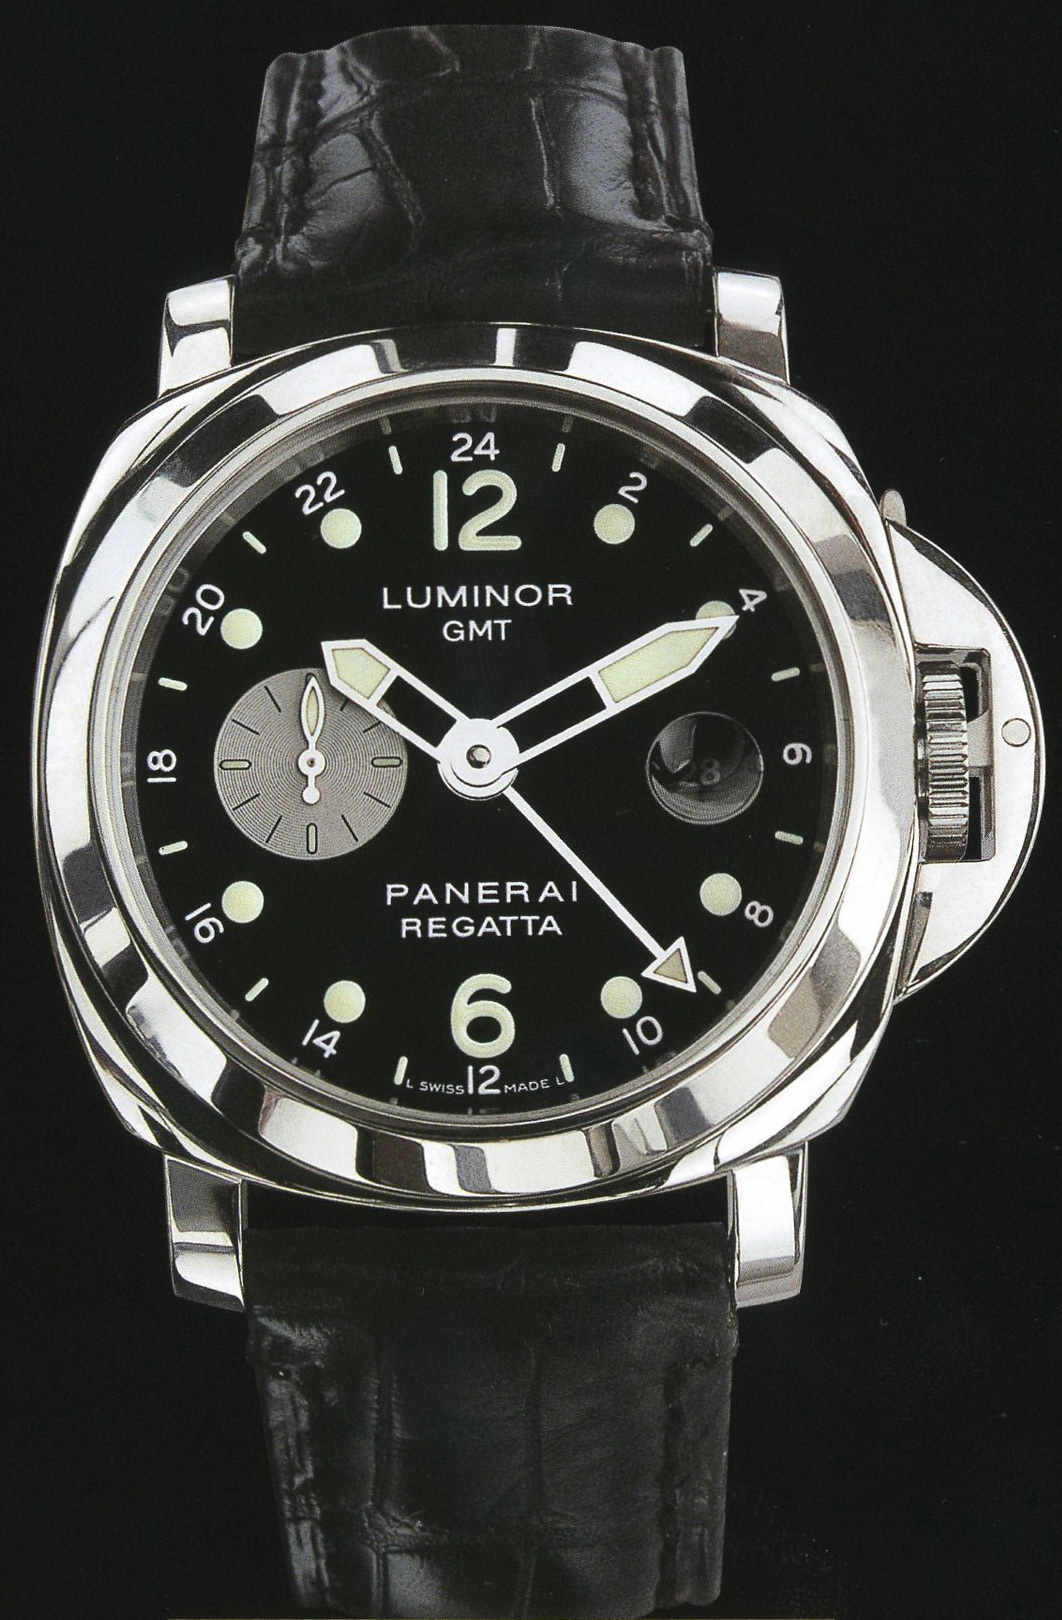 wristwatch Panerai 2002 Special Edition Luminor GMT Regatta 2002